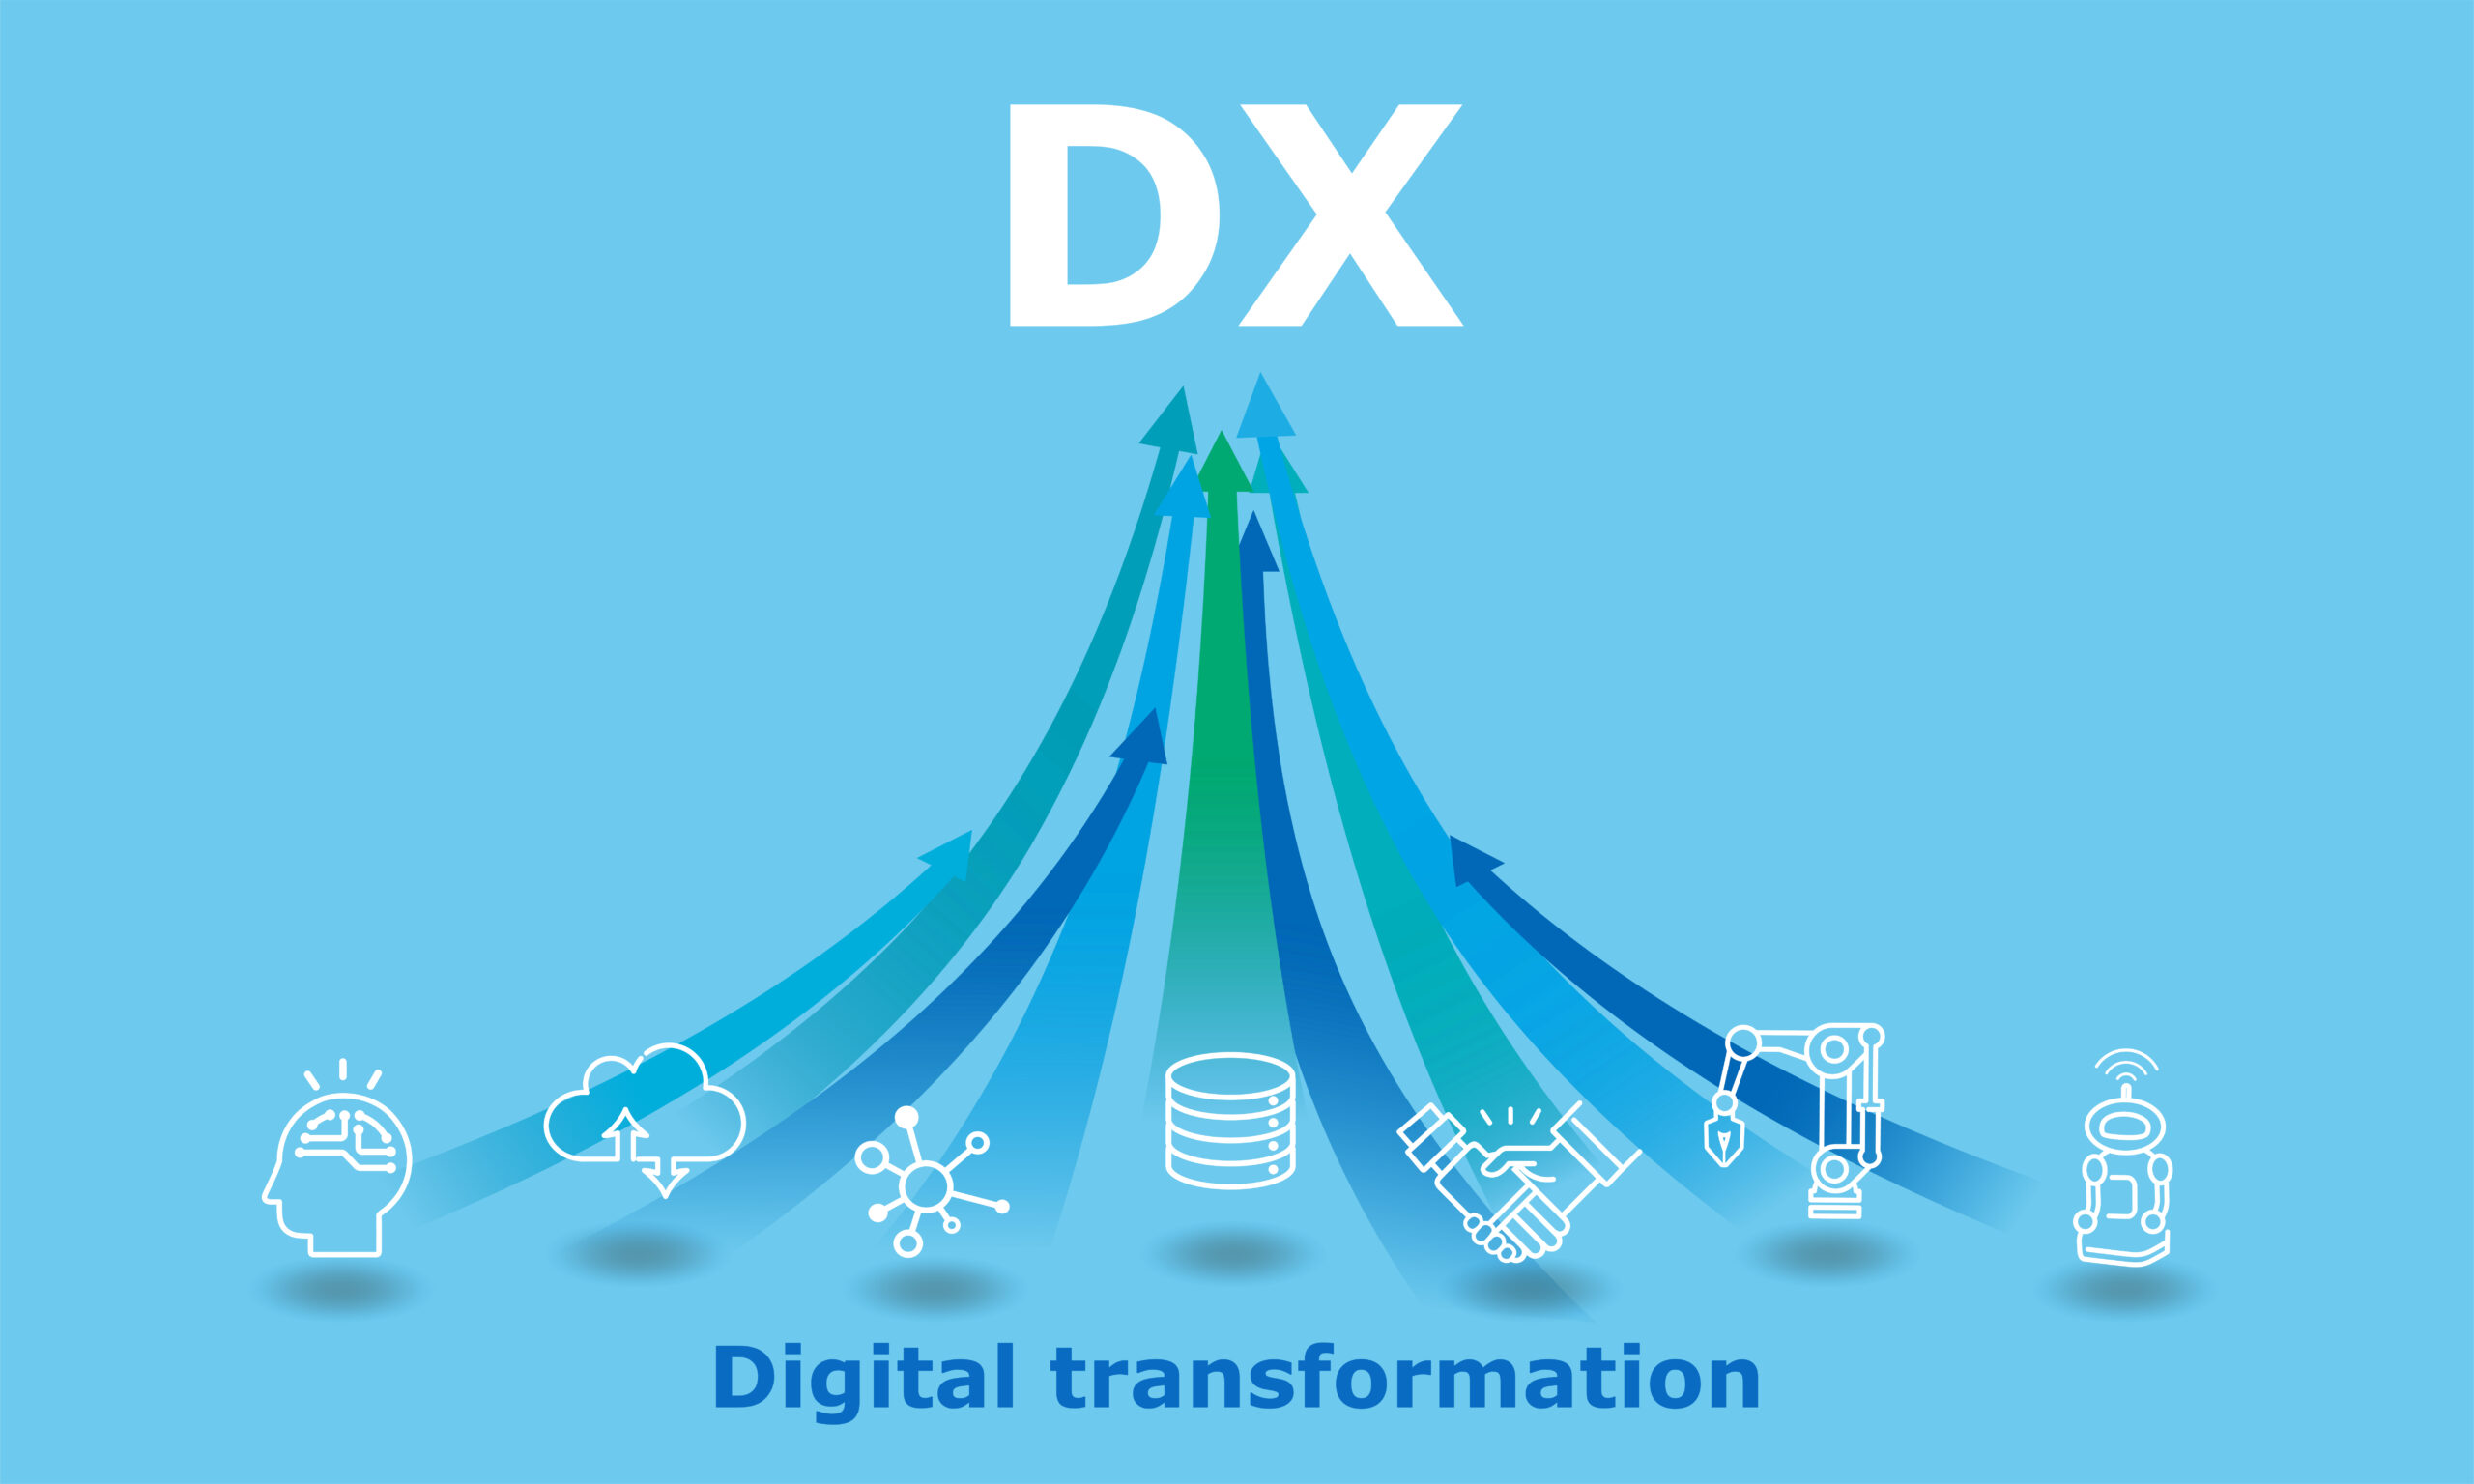 DX（デジタルトランスフォーメーション）とはなんなのか？｜意味や定義をわかりやすく解説